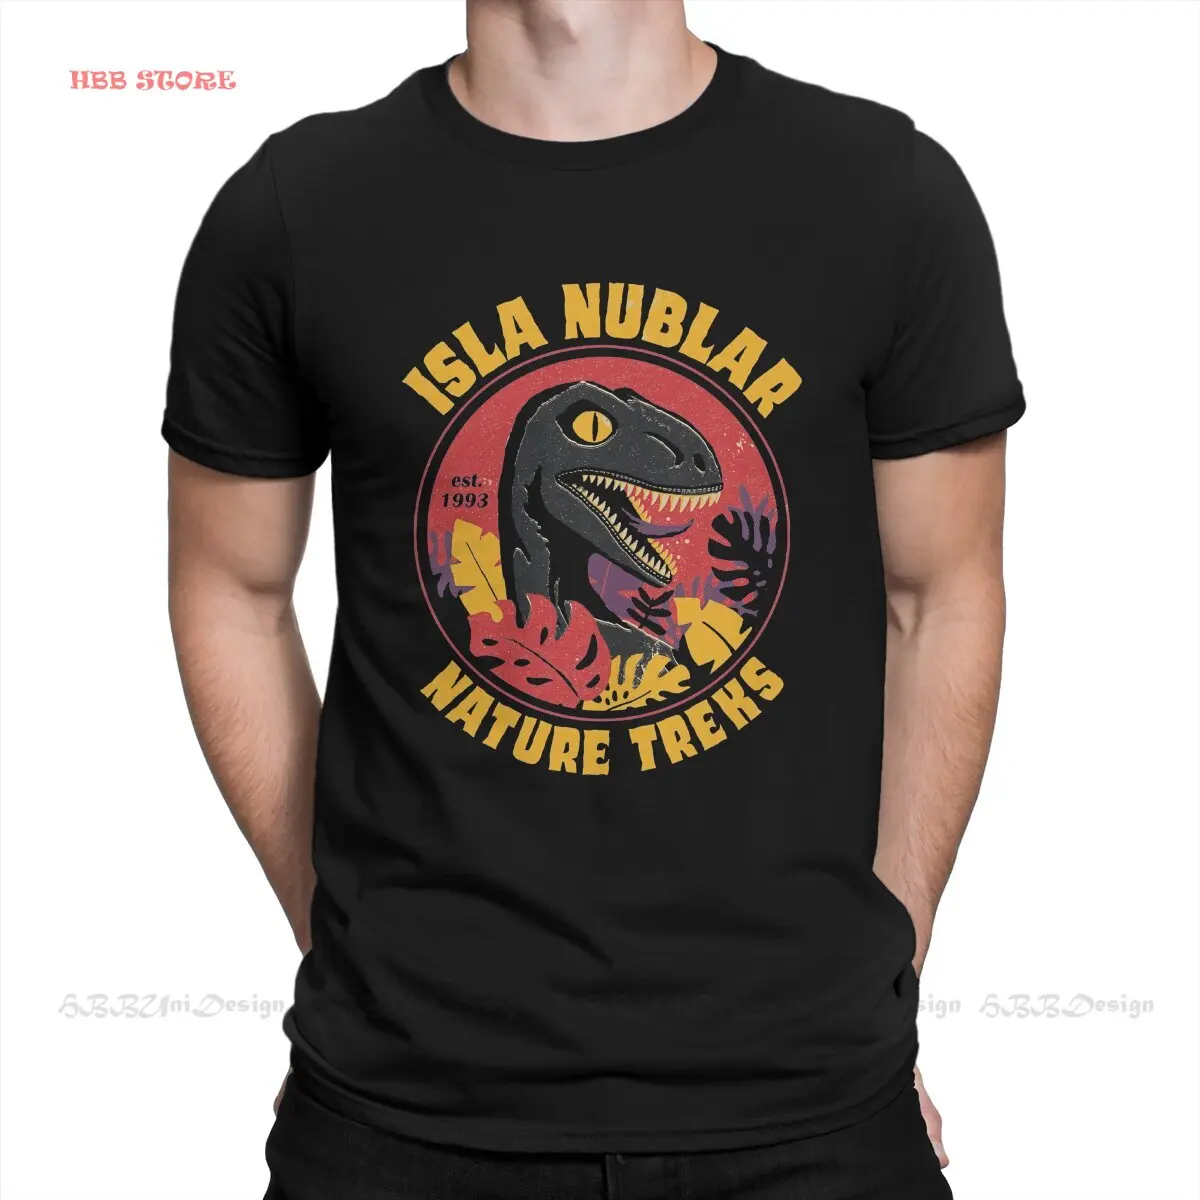 Isla Nublar Nature Treks Style TShirt Jurassic Park Dinosaurs Film Comfortable Creative Gift Idea  T Shirt Short Sleeve Hot Sale